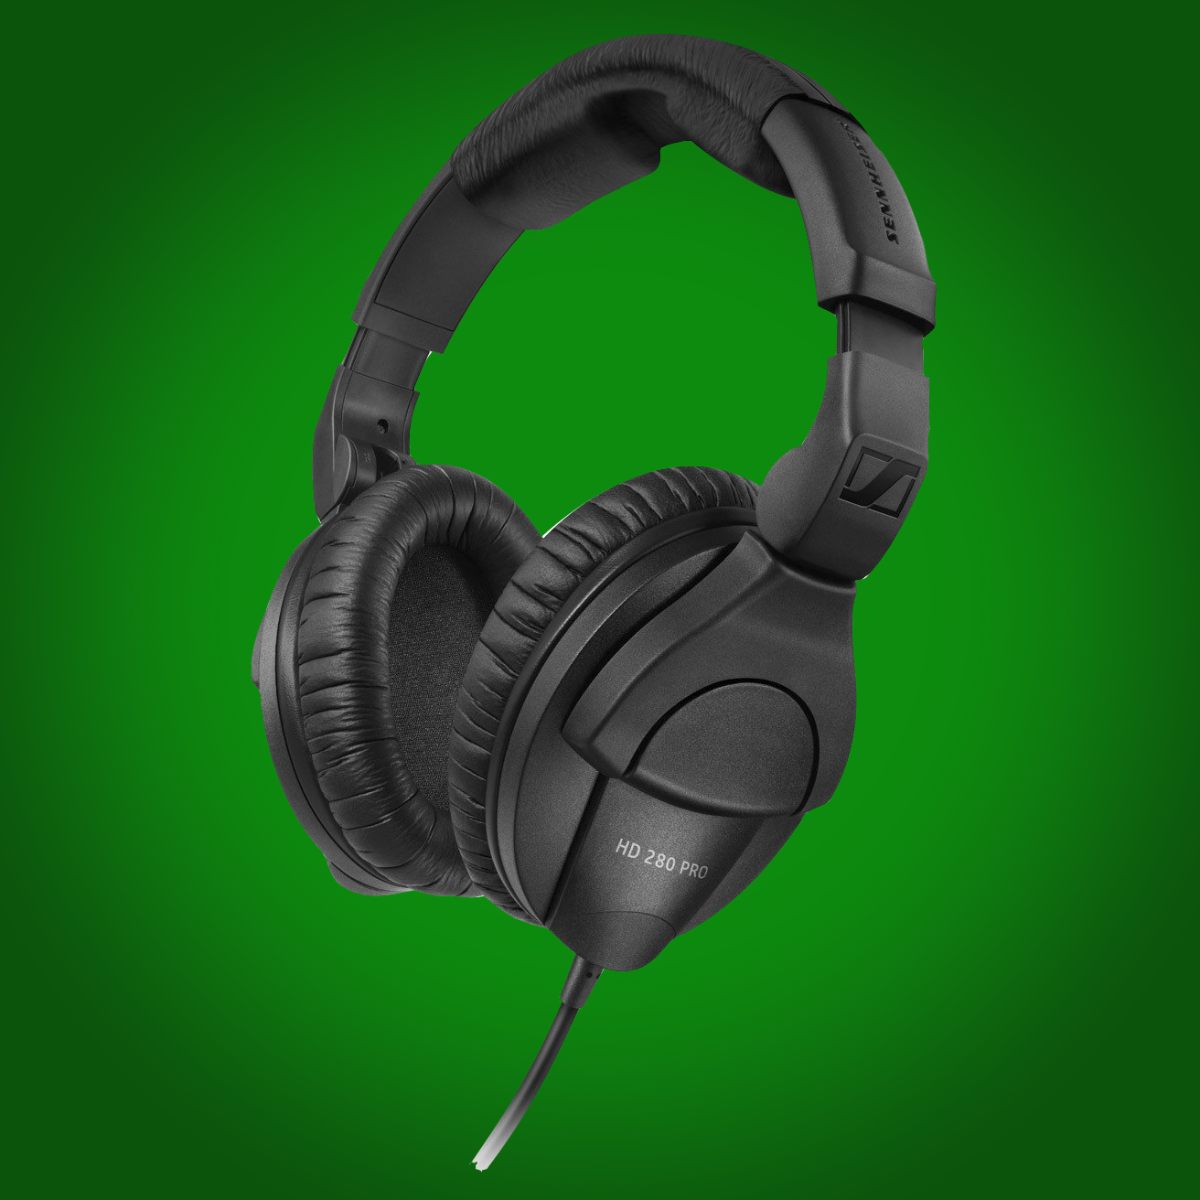 HD 280 PRO: Best Sennheiser Studio Monitoring Headphones